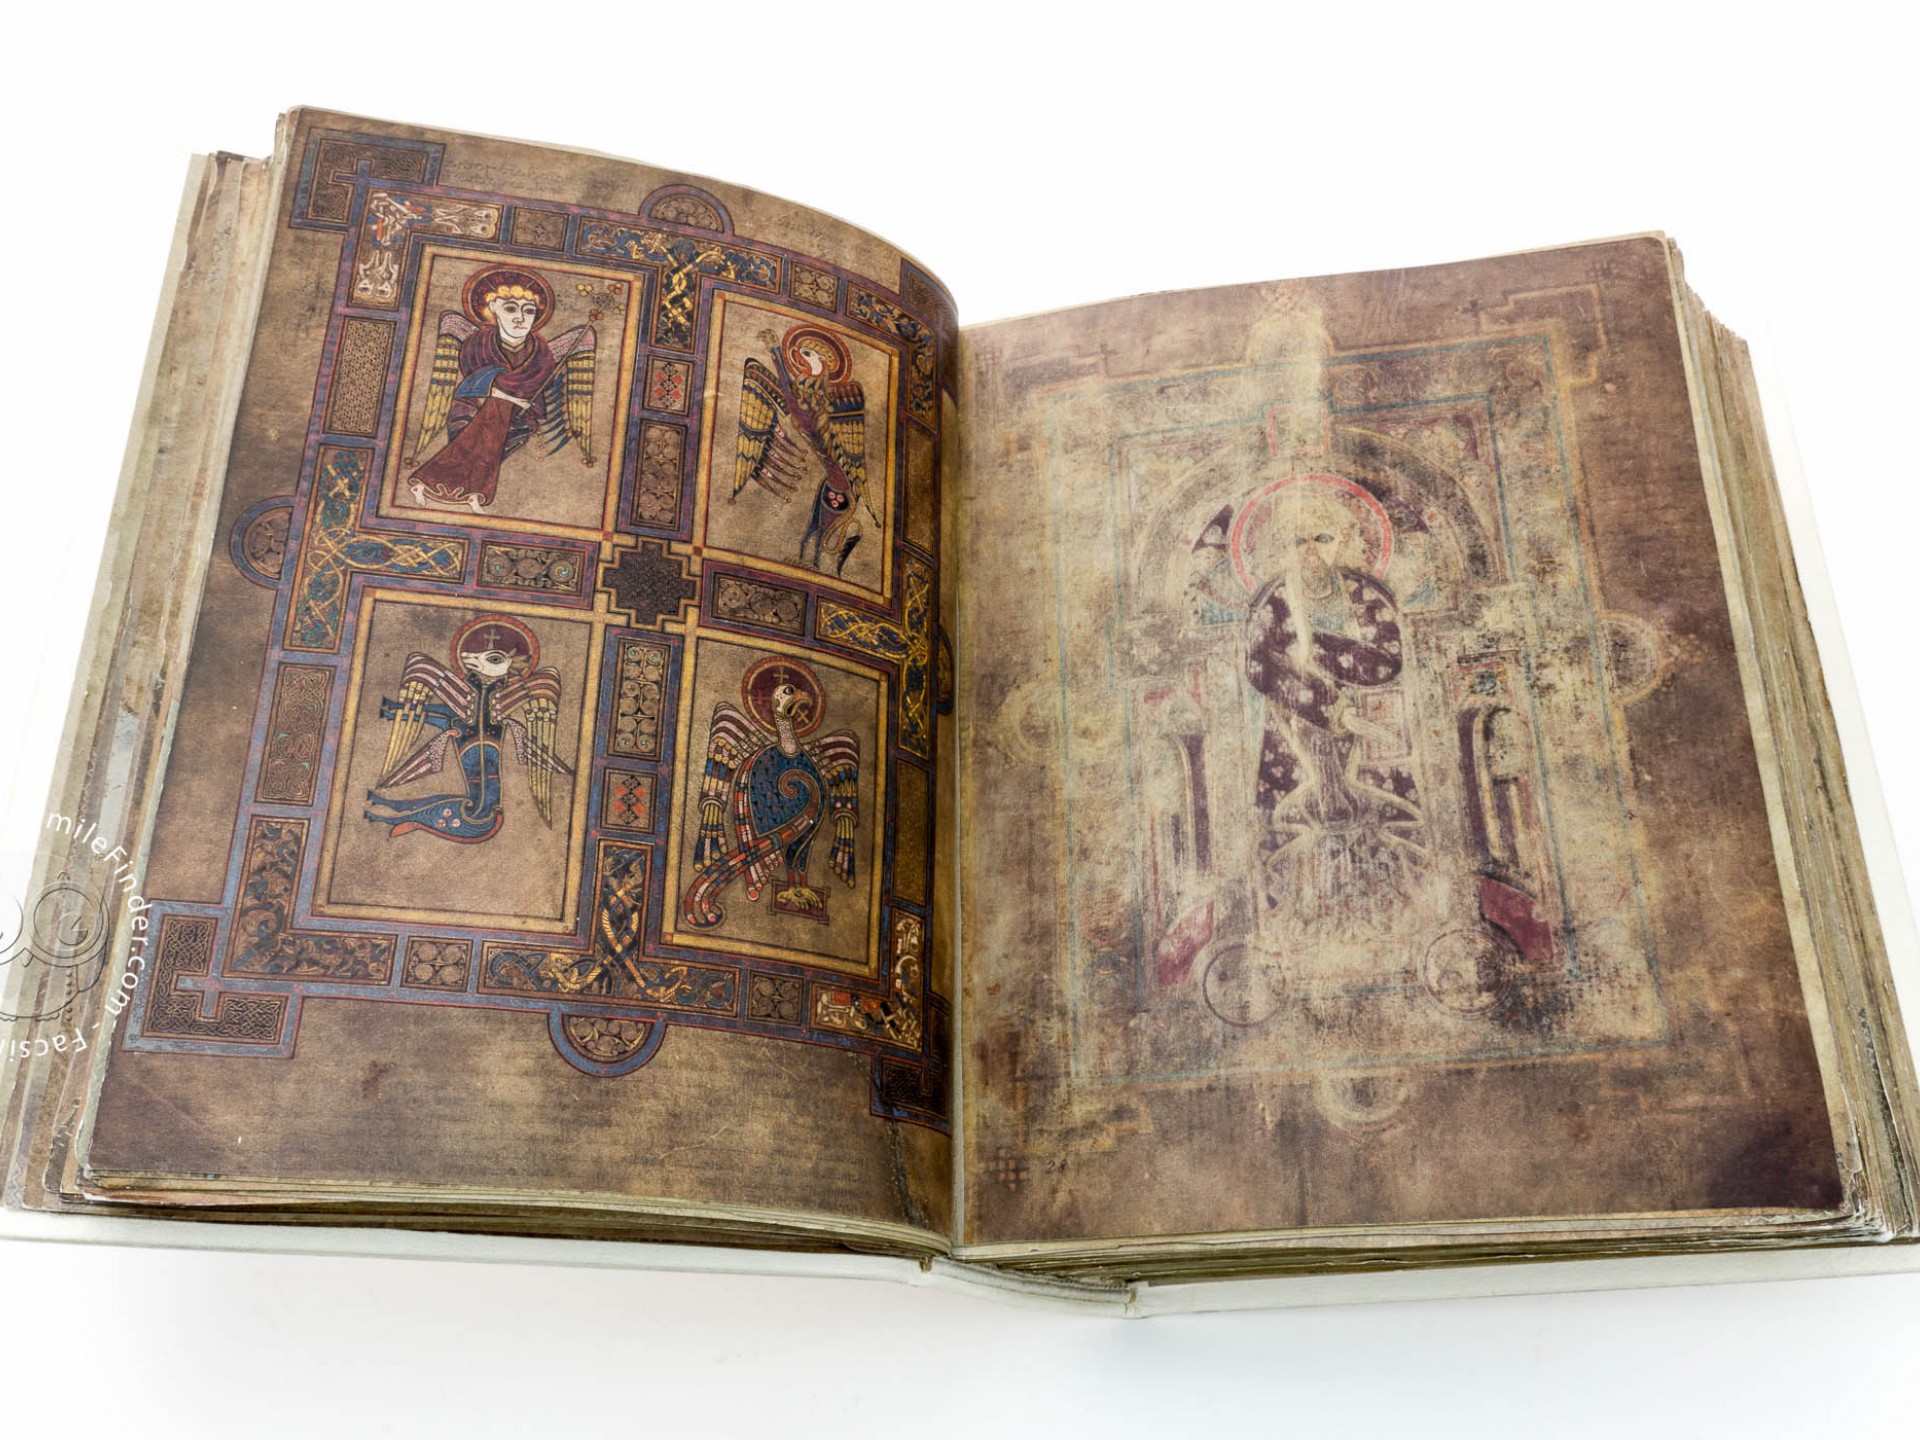 illuminated manuscripts have historically been created